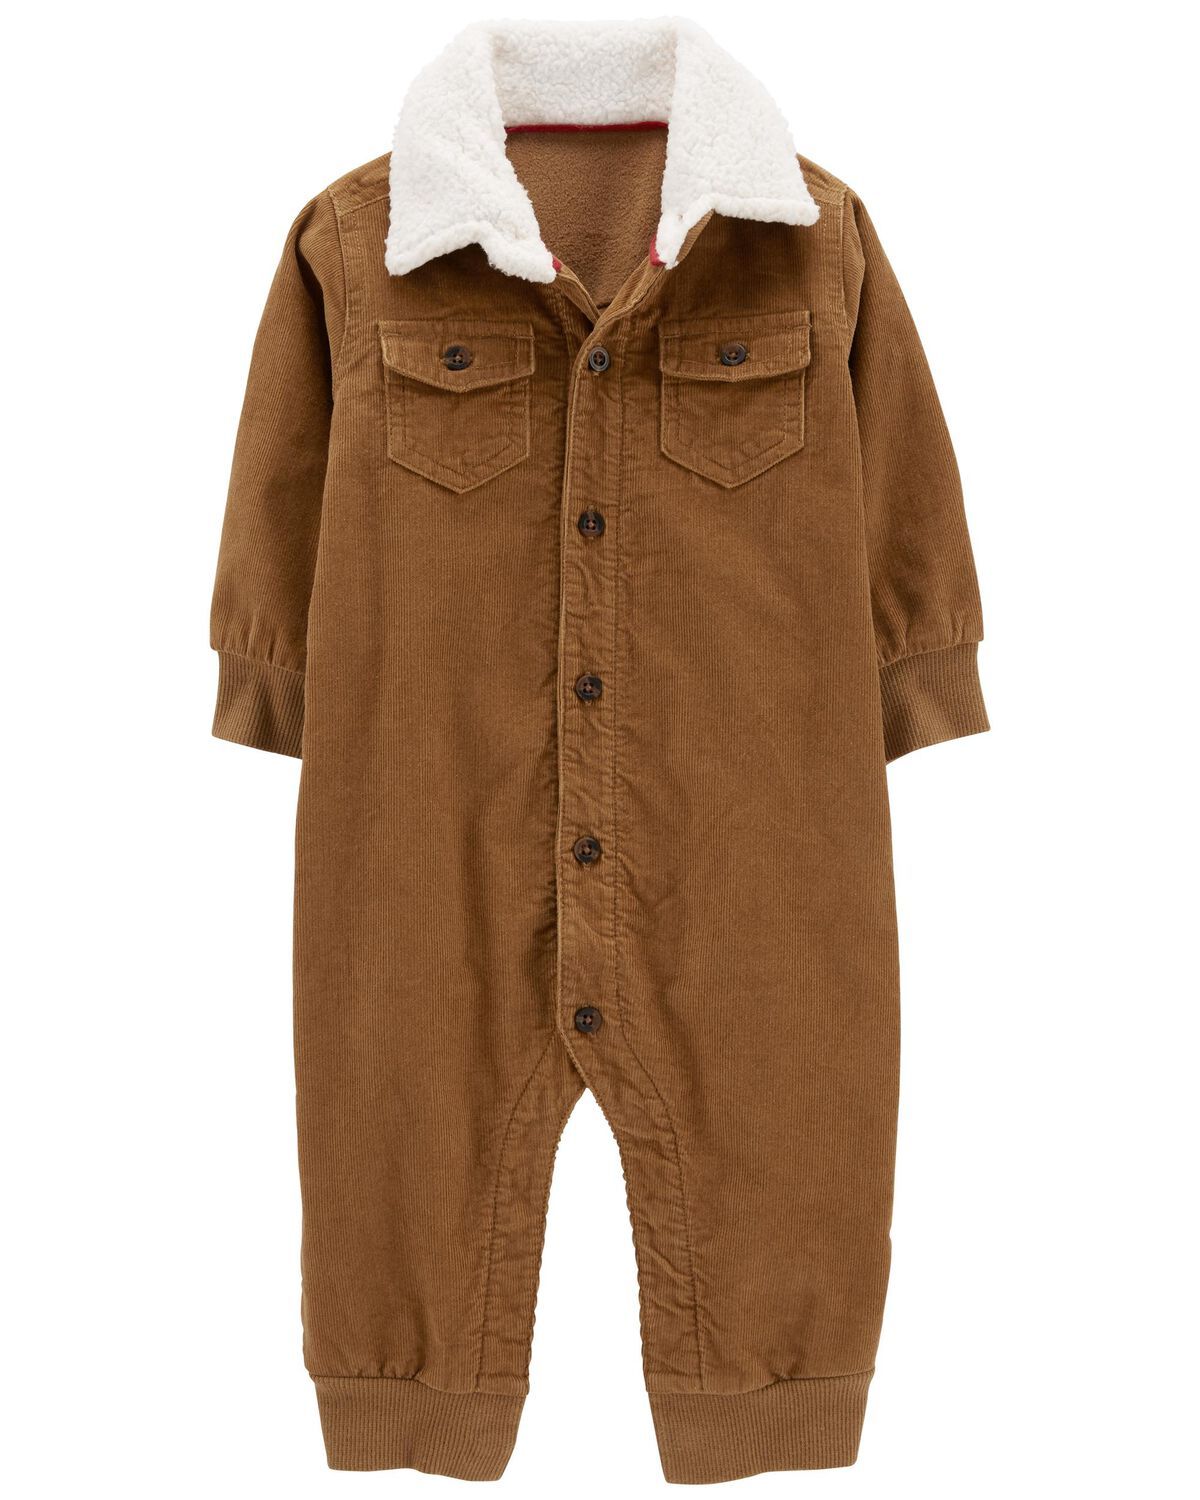 Brown Baby Corduroy Jumpsuit | carters.com | Carter's